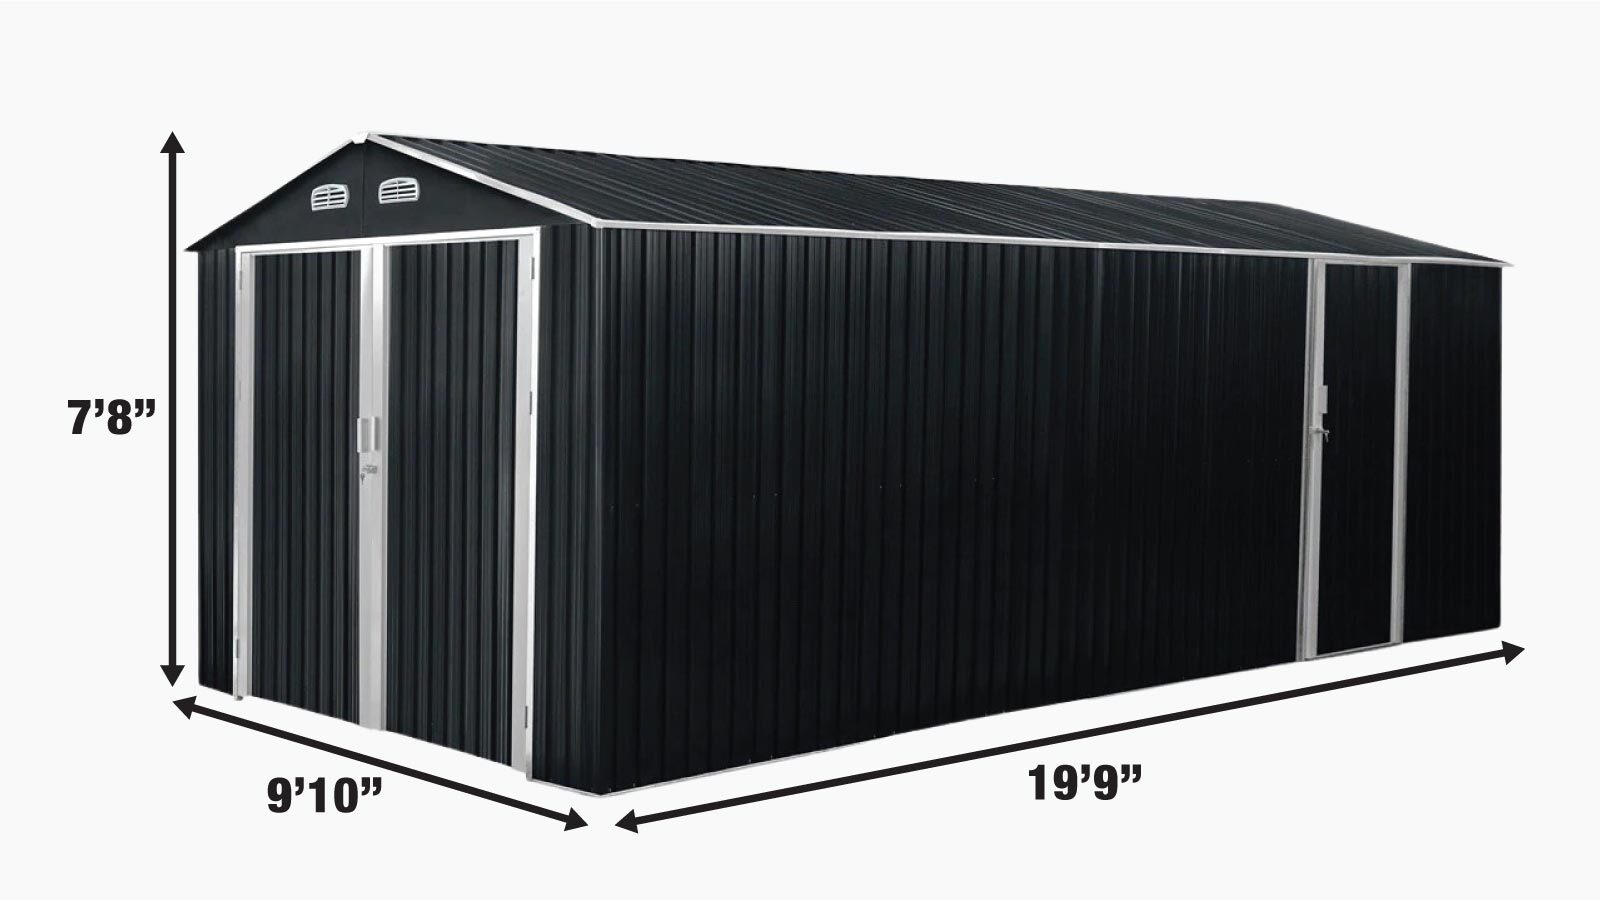 TMG Industrial 10’ x 20’ Metal Garage Shed with Double Front Doors, 7’8” Peak Height, Side Entry Door, 185 Sq-Ft Floor Space, TMG-MS1020A-specifications-image